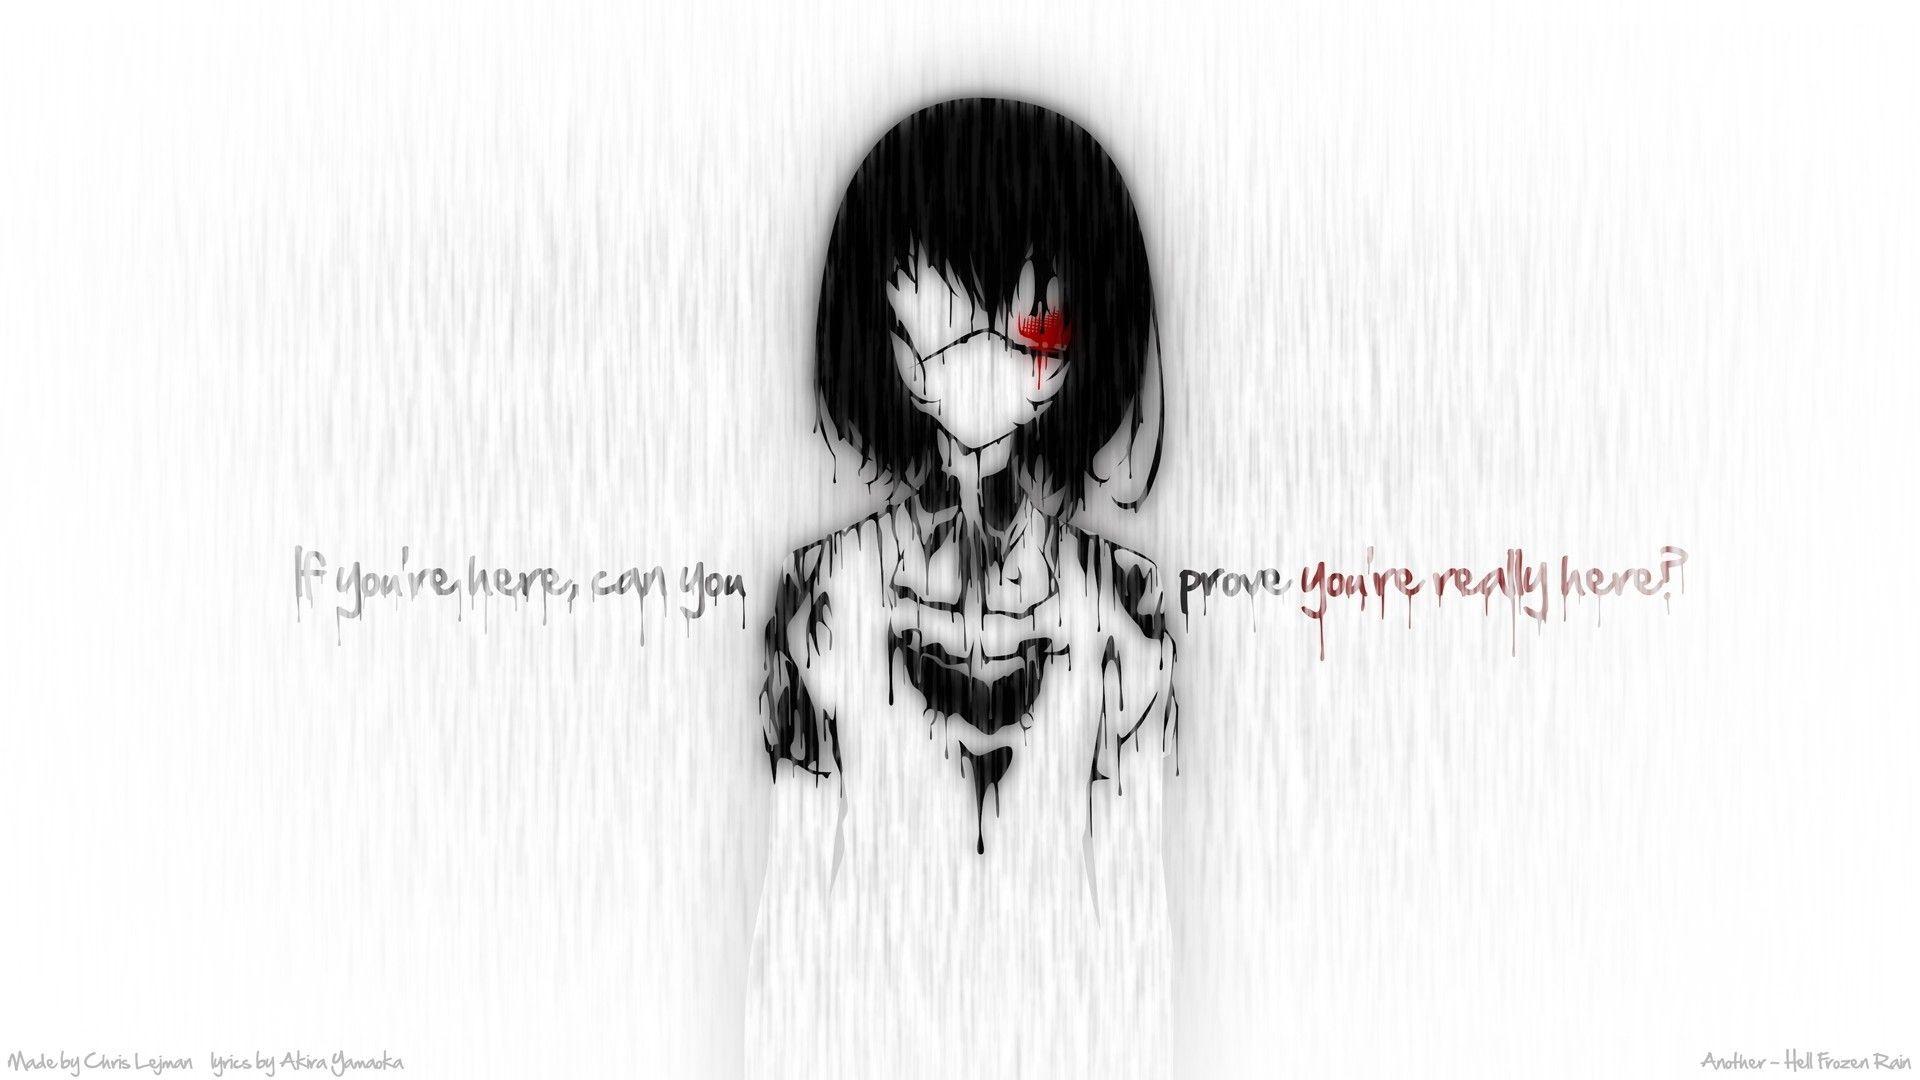 Creepy rain blood quotes eyepatch typography anime anime girls